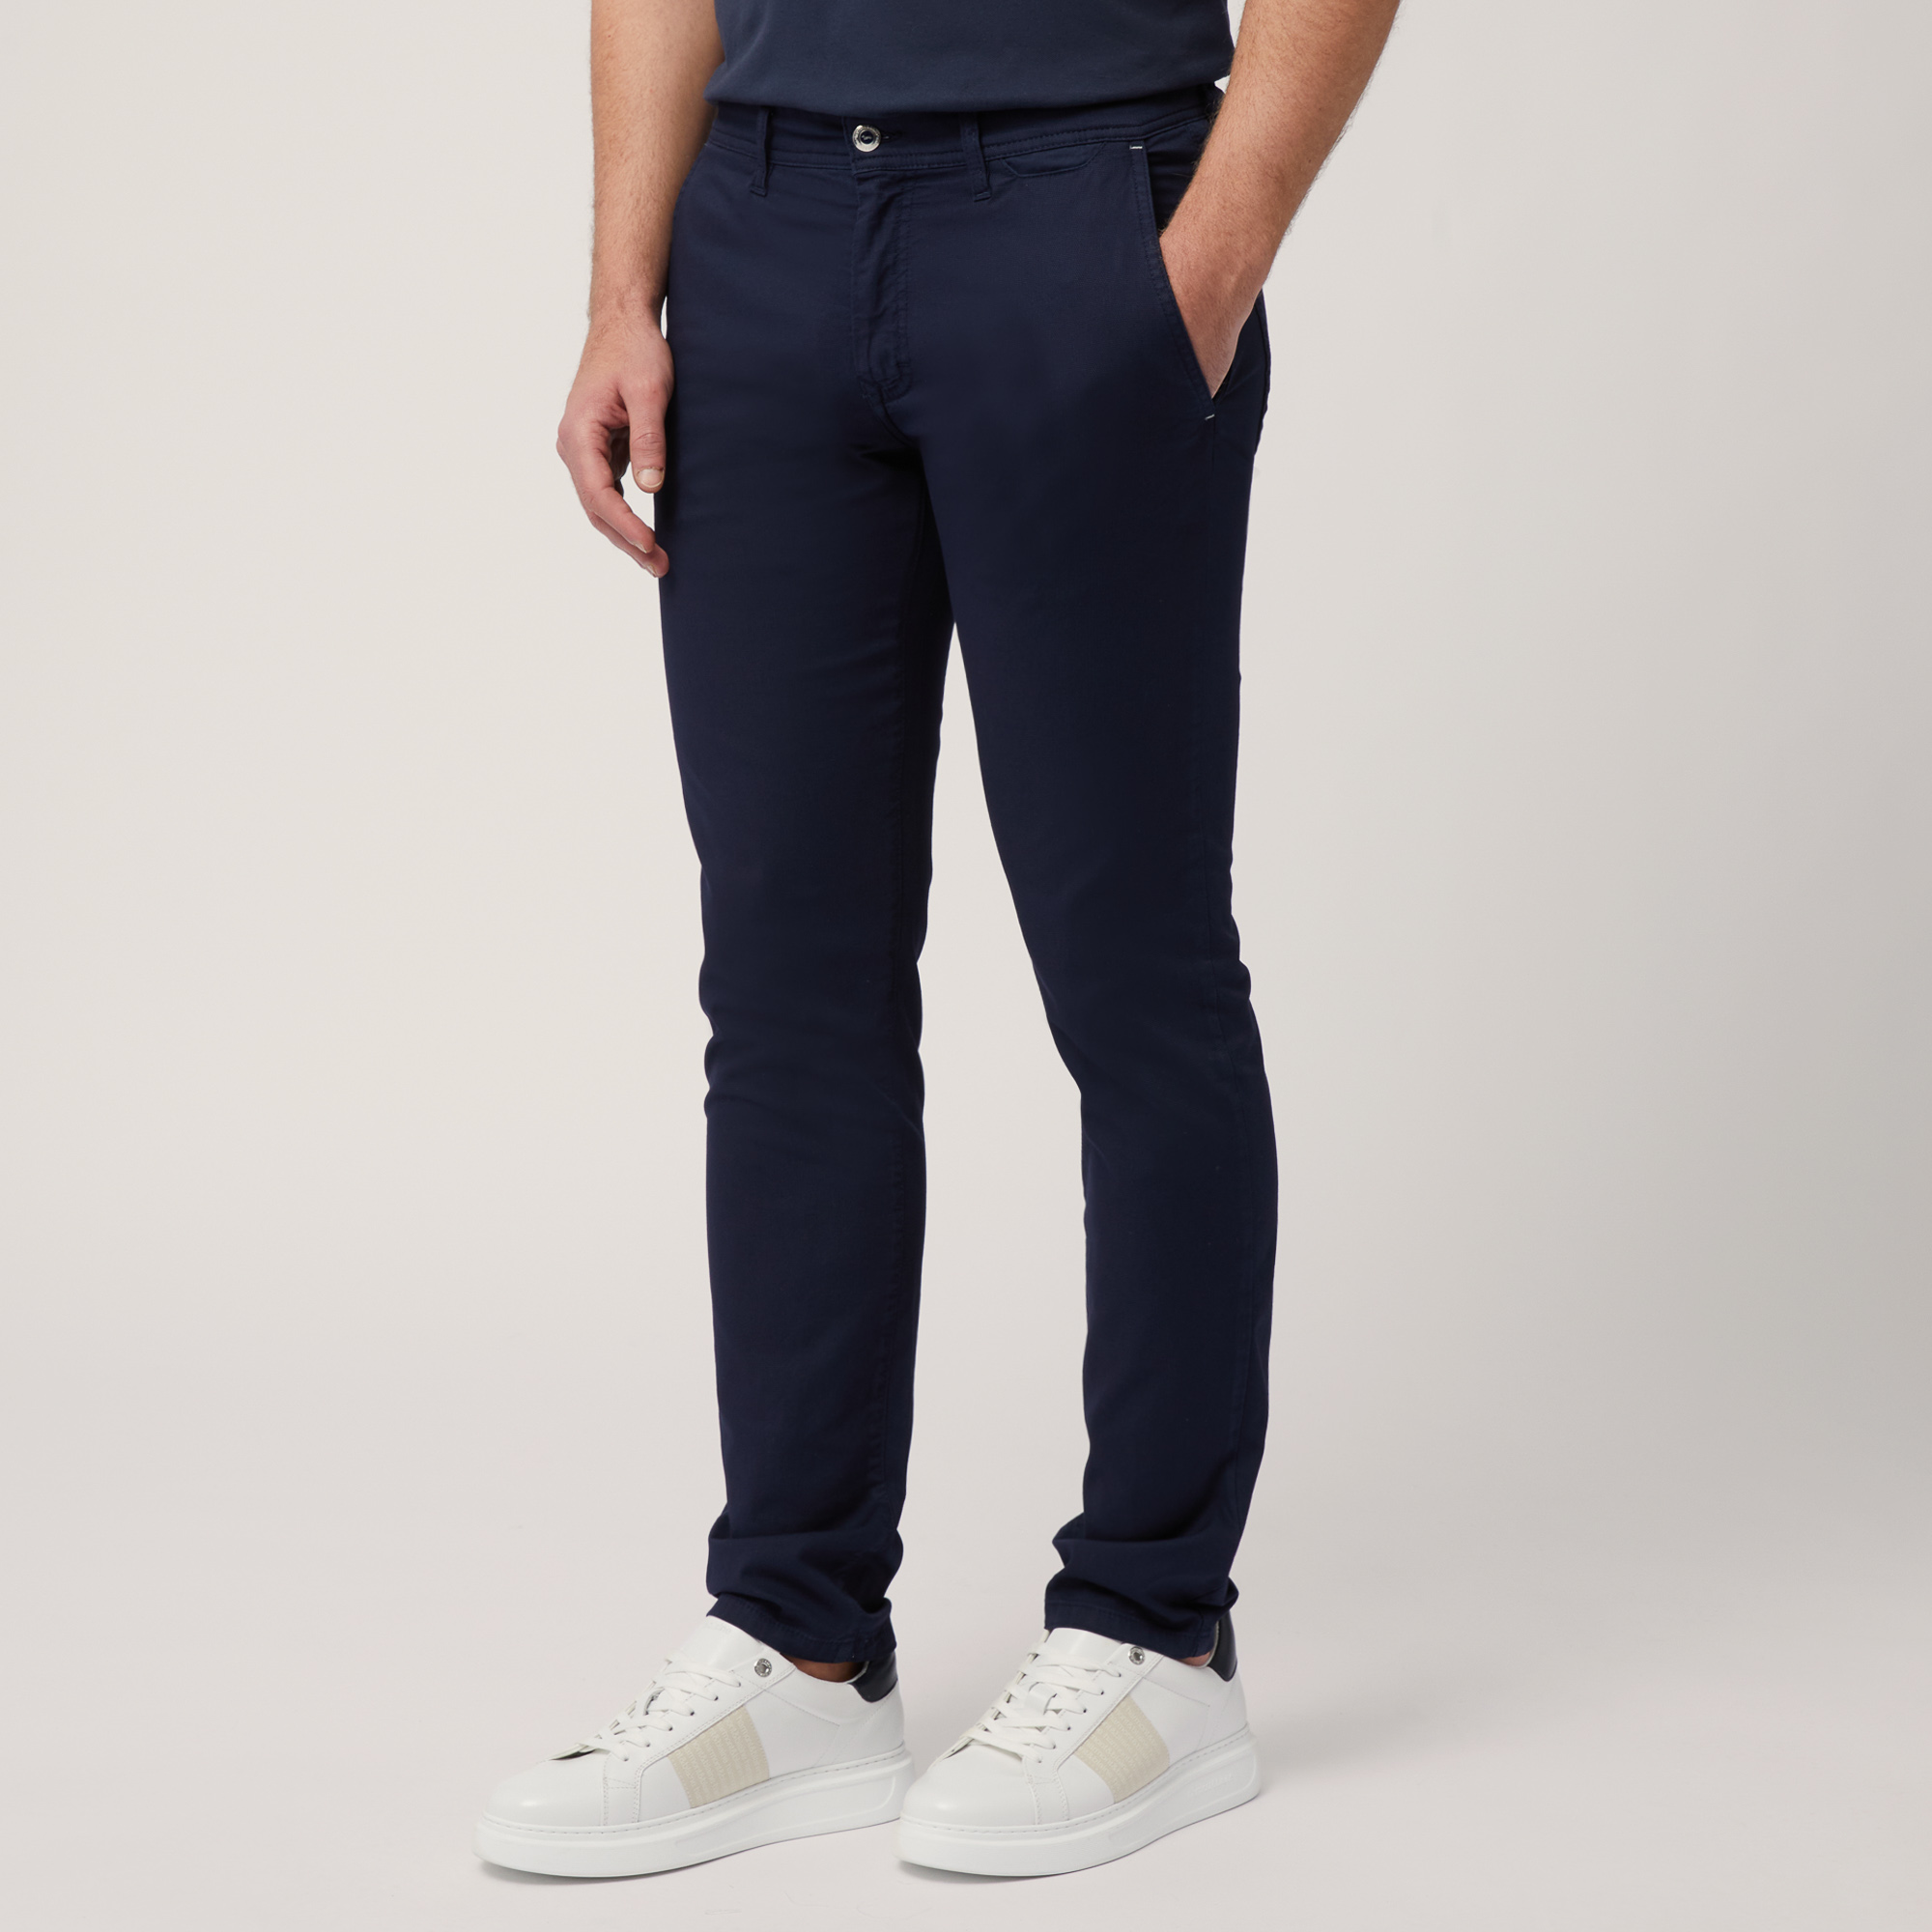 Pantaloni Colorfive, Blu Navy, large image number 0